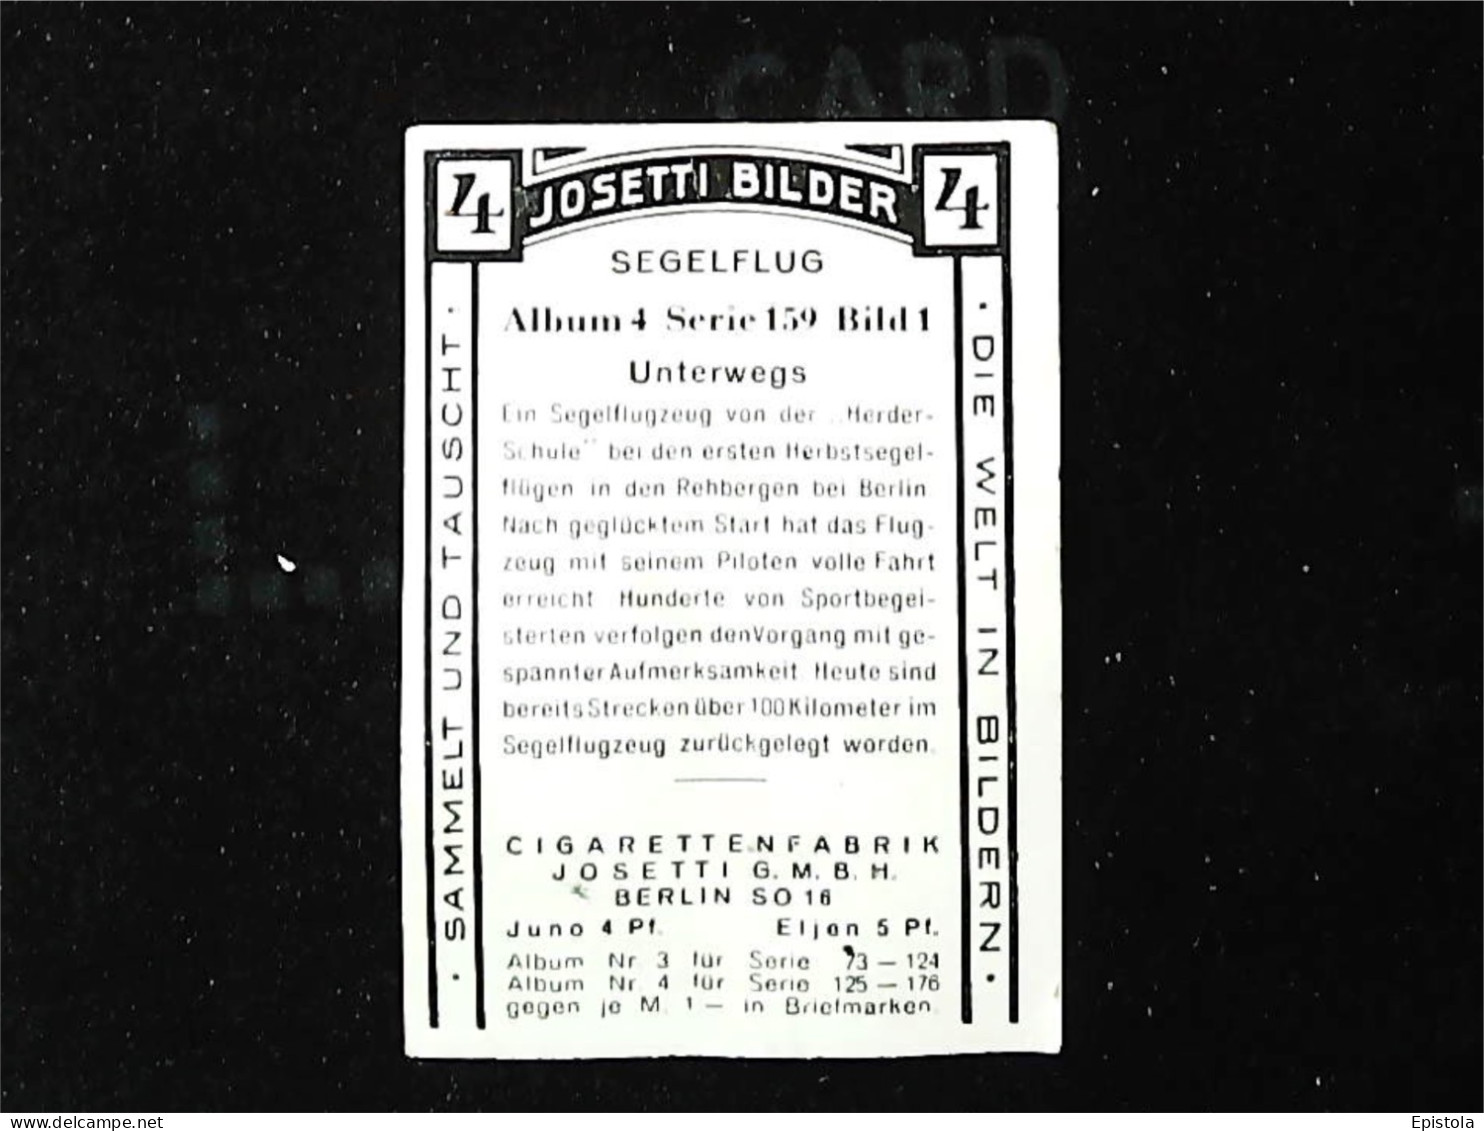 ► Avion Planeur  Précurseur Allemand  Herder-Shhule  - Chromo-Image Cigarette Josetti Bilder Berlin Album 4 1920's - Other Brands